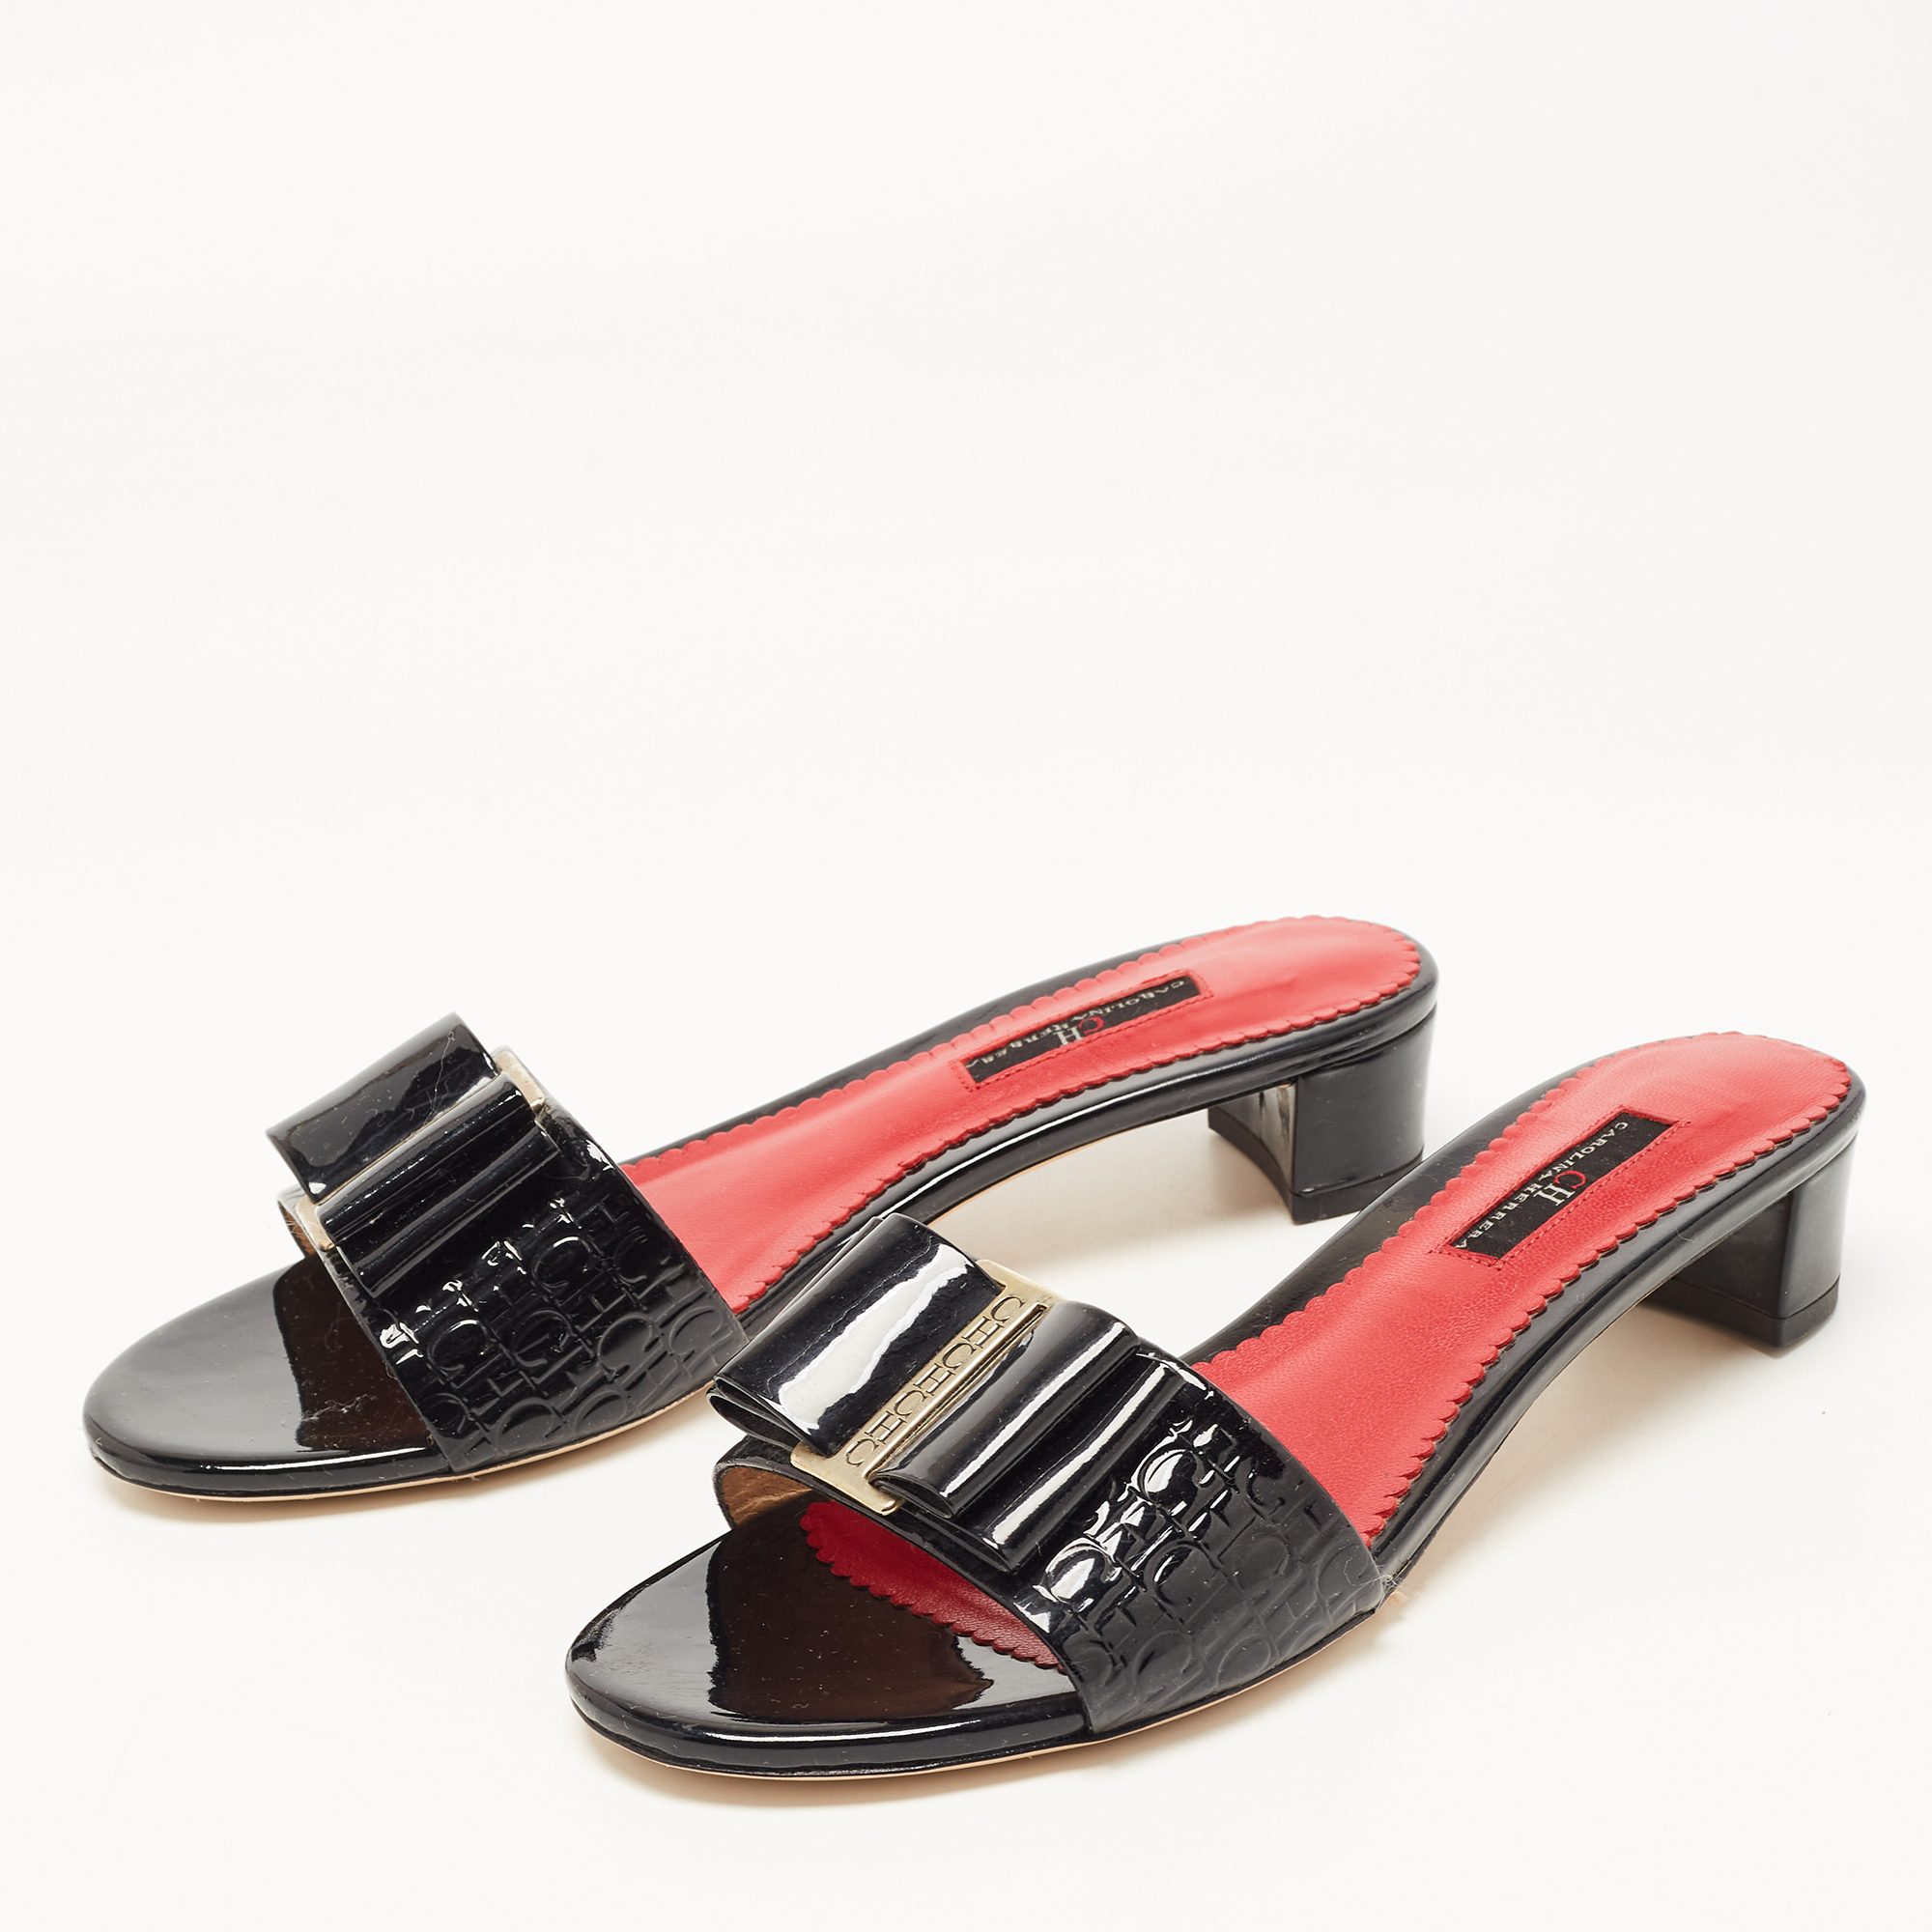 

CH Carolina Herrera Black Patent Leather Bow Slide Sandals Size